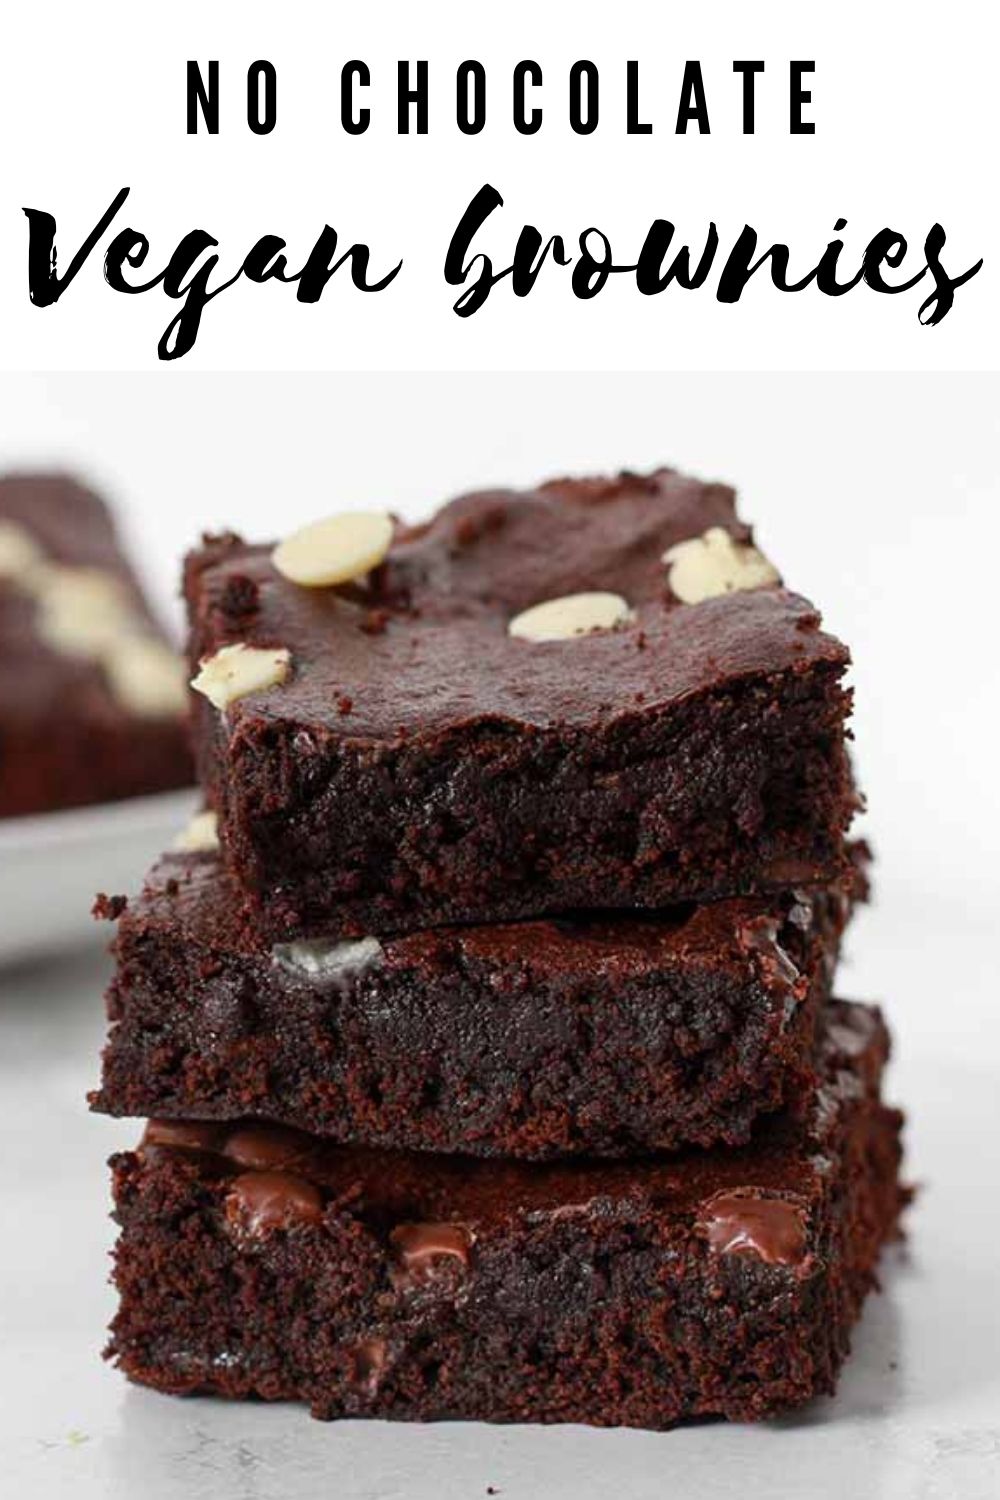 Pinterest Pin- brownies image plus text that reads "no chocolate vegan brownies"